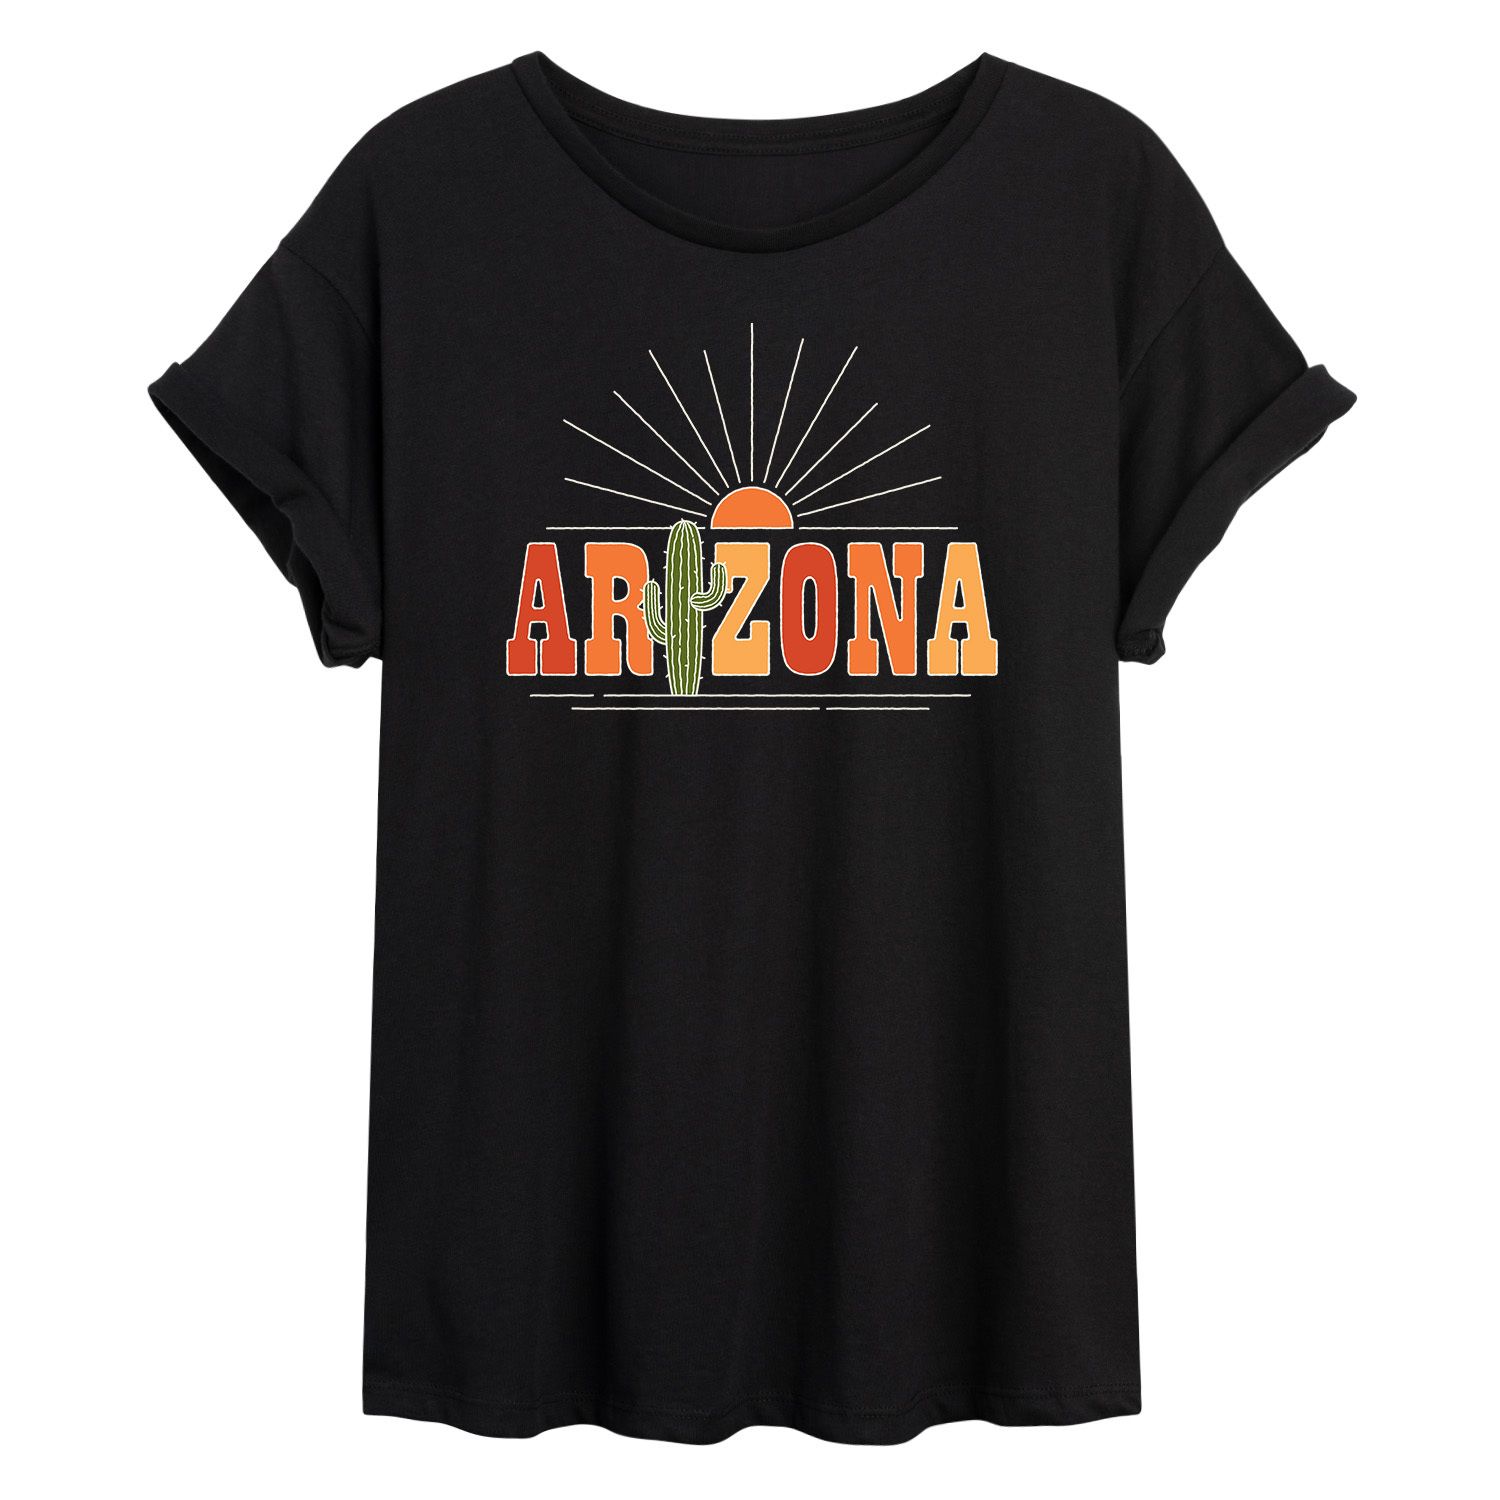 Размерная футболка с рисунком Arizona для юниоров Licensed Character